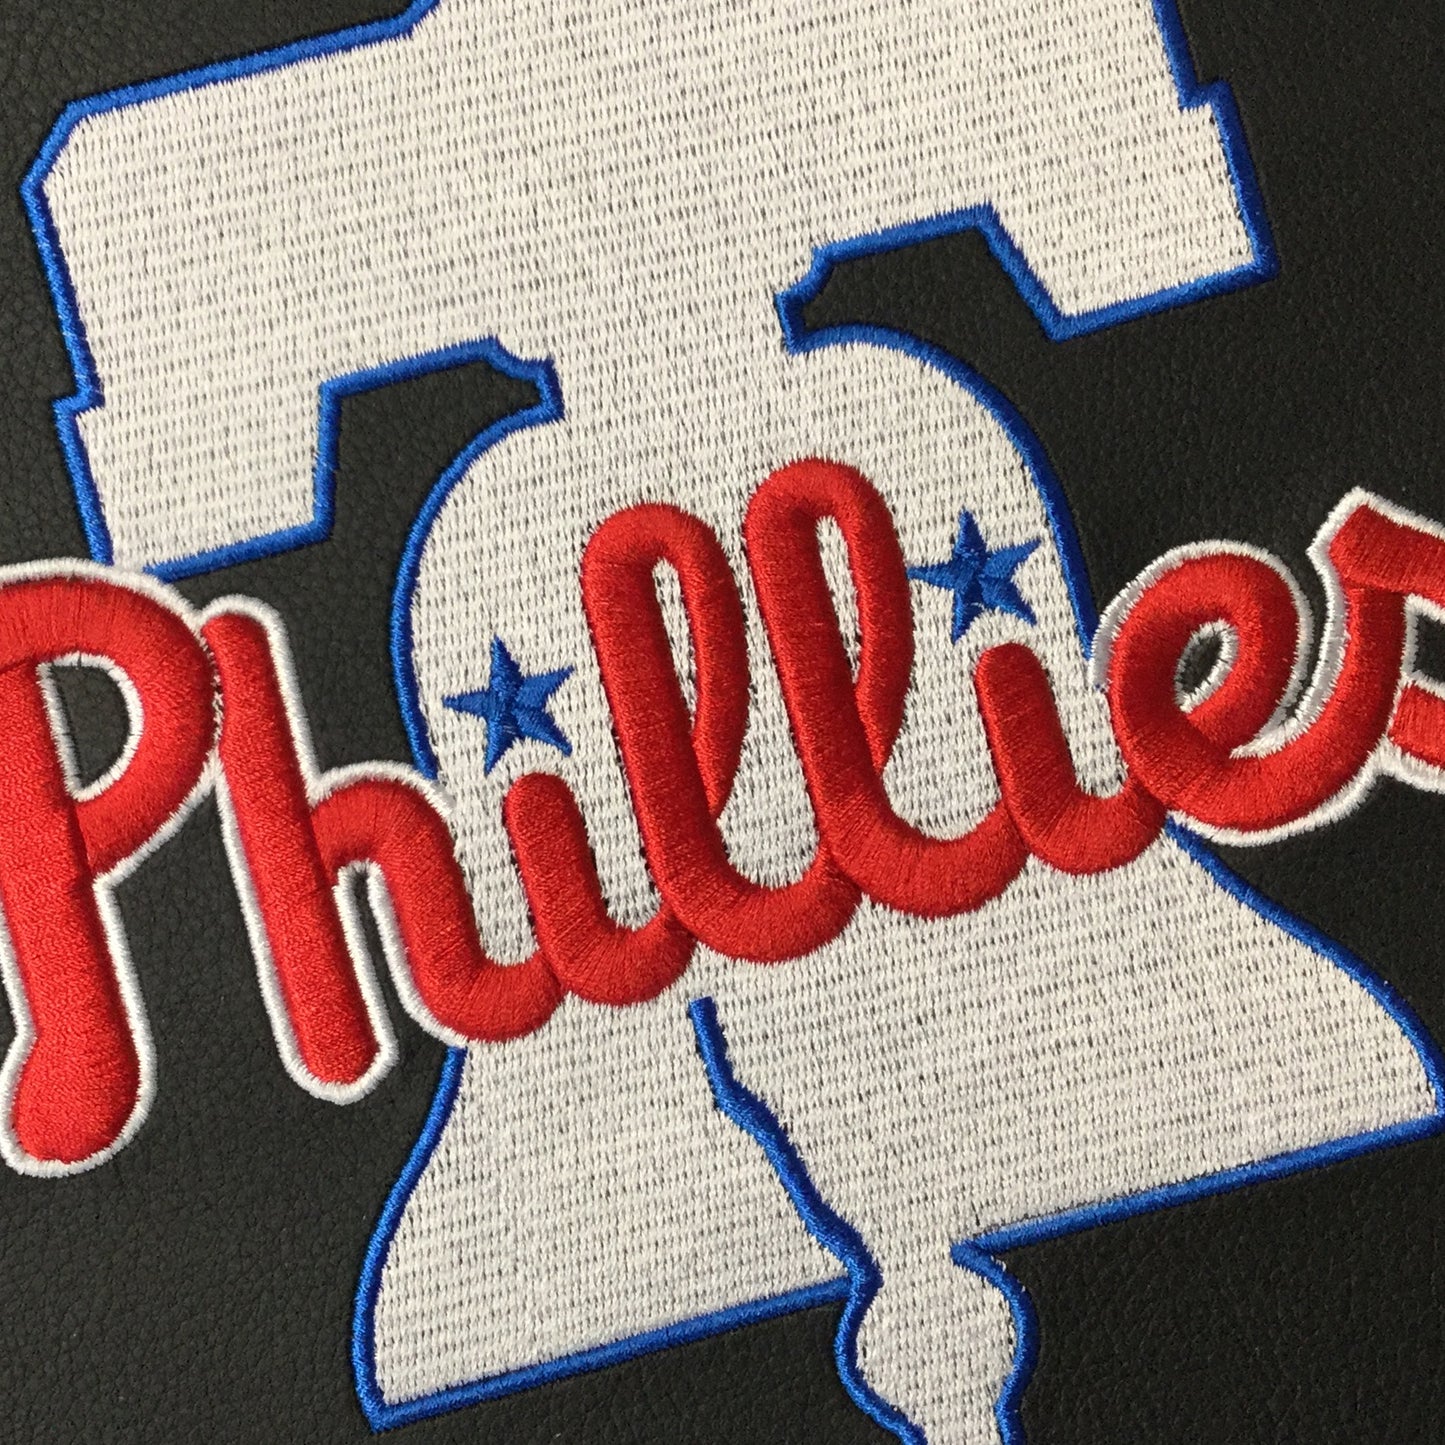 Curve Task Chair with Philadelphia Phillies Primary Logo